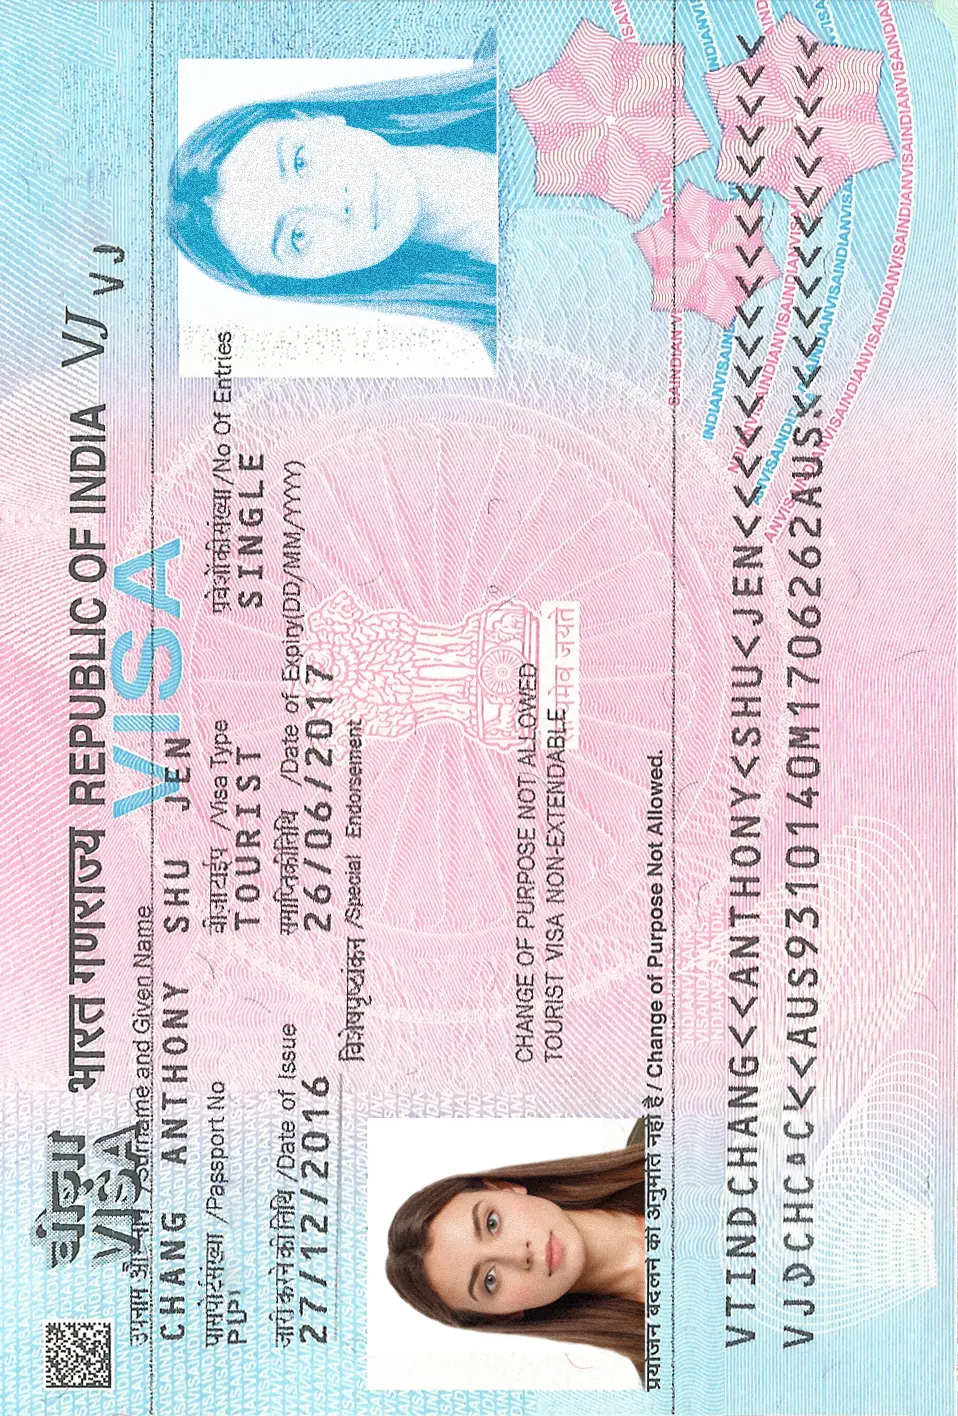 Visa to India Online 350x350 Px